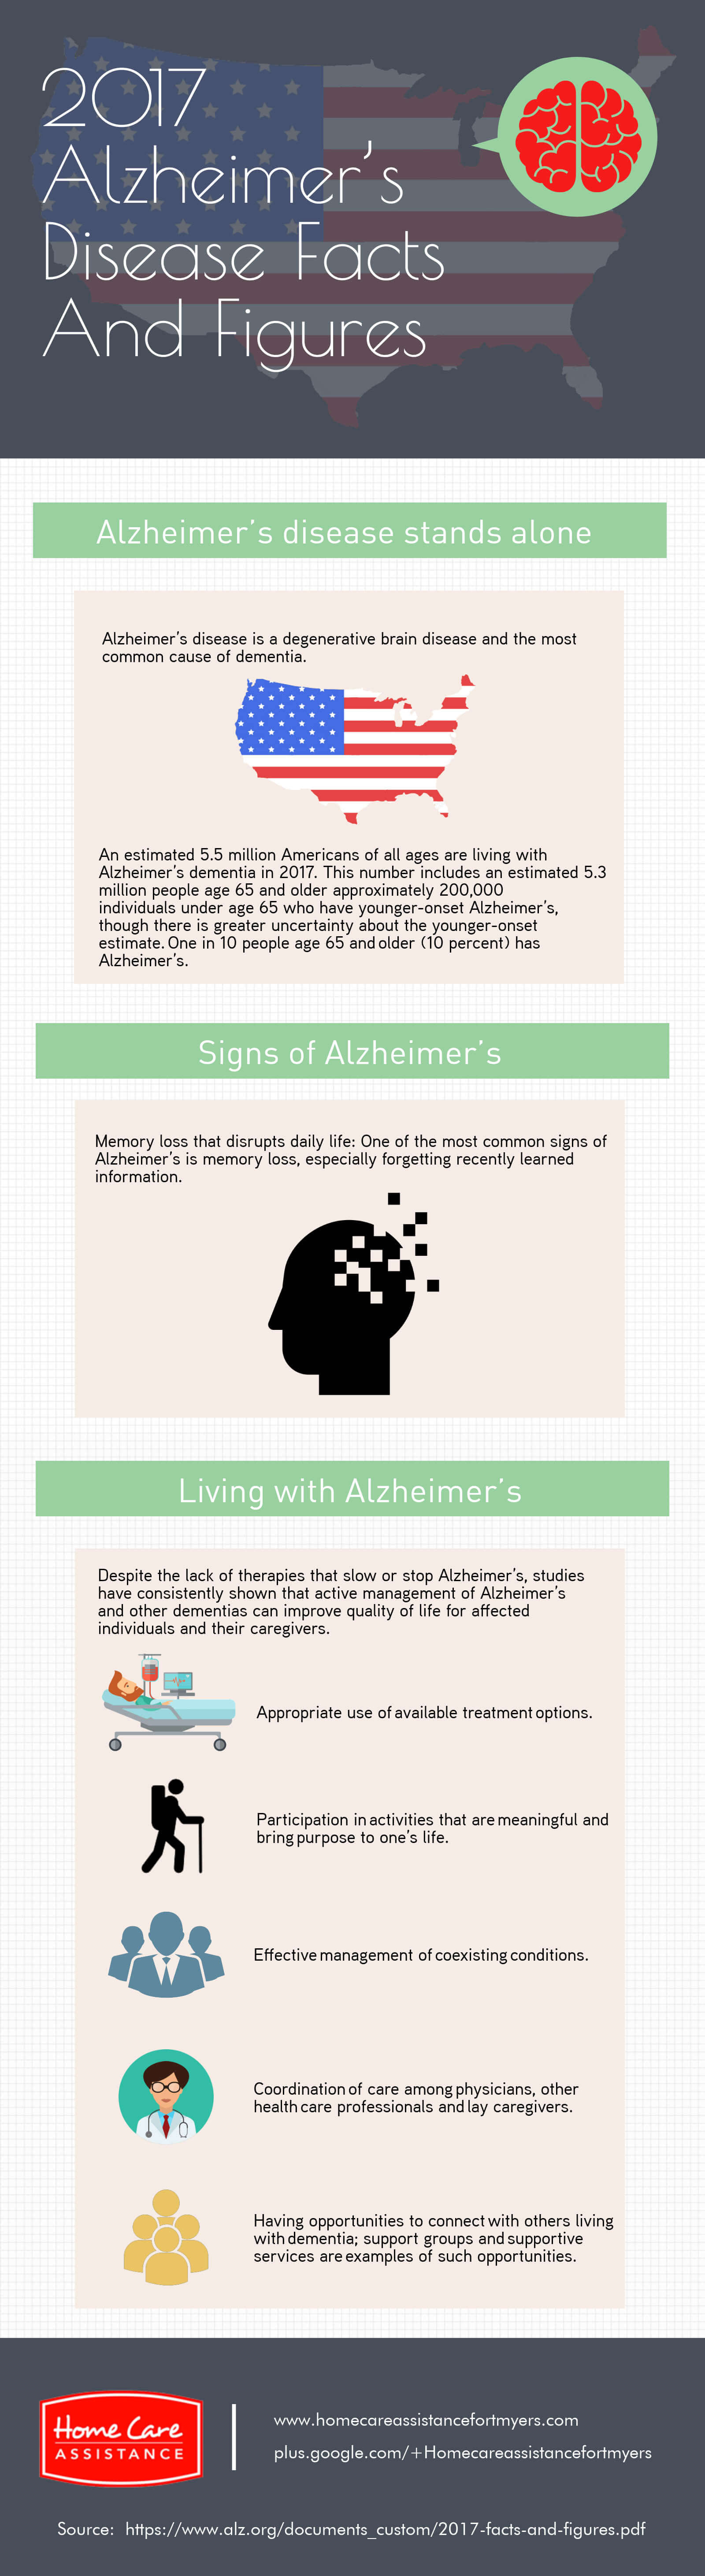 Alzheimers Disease in 2017